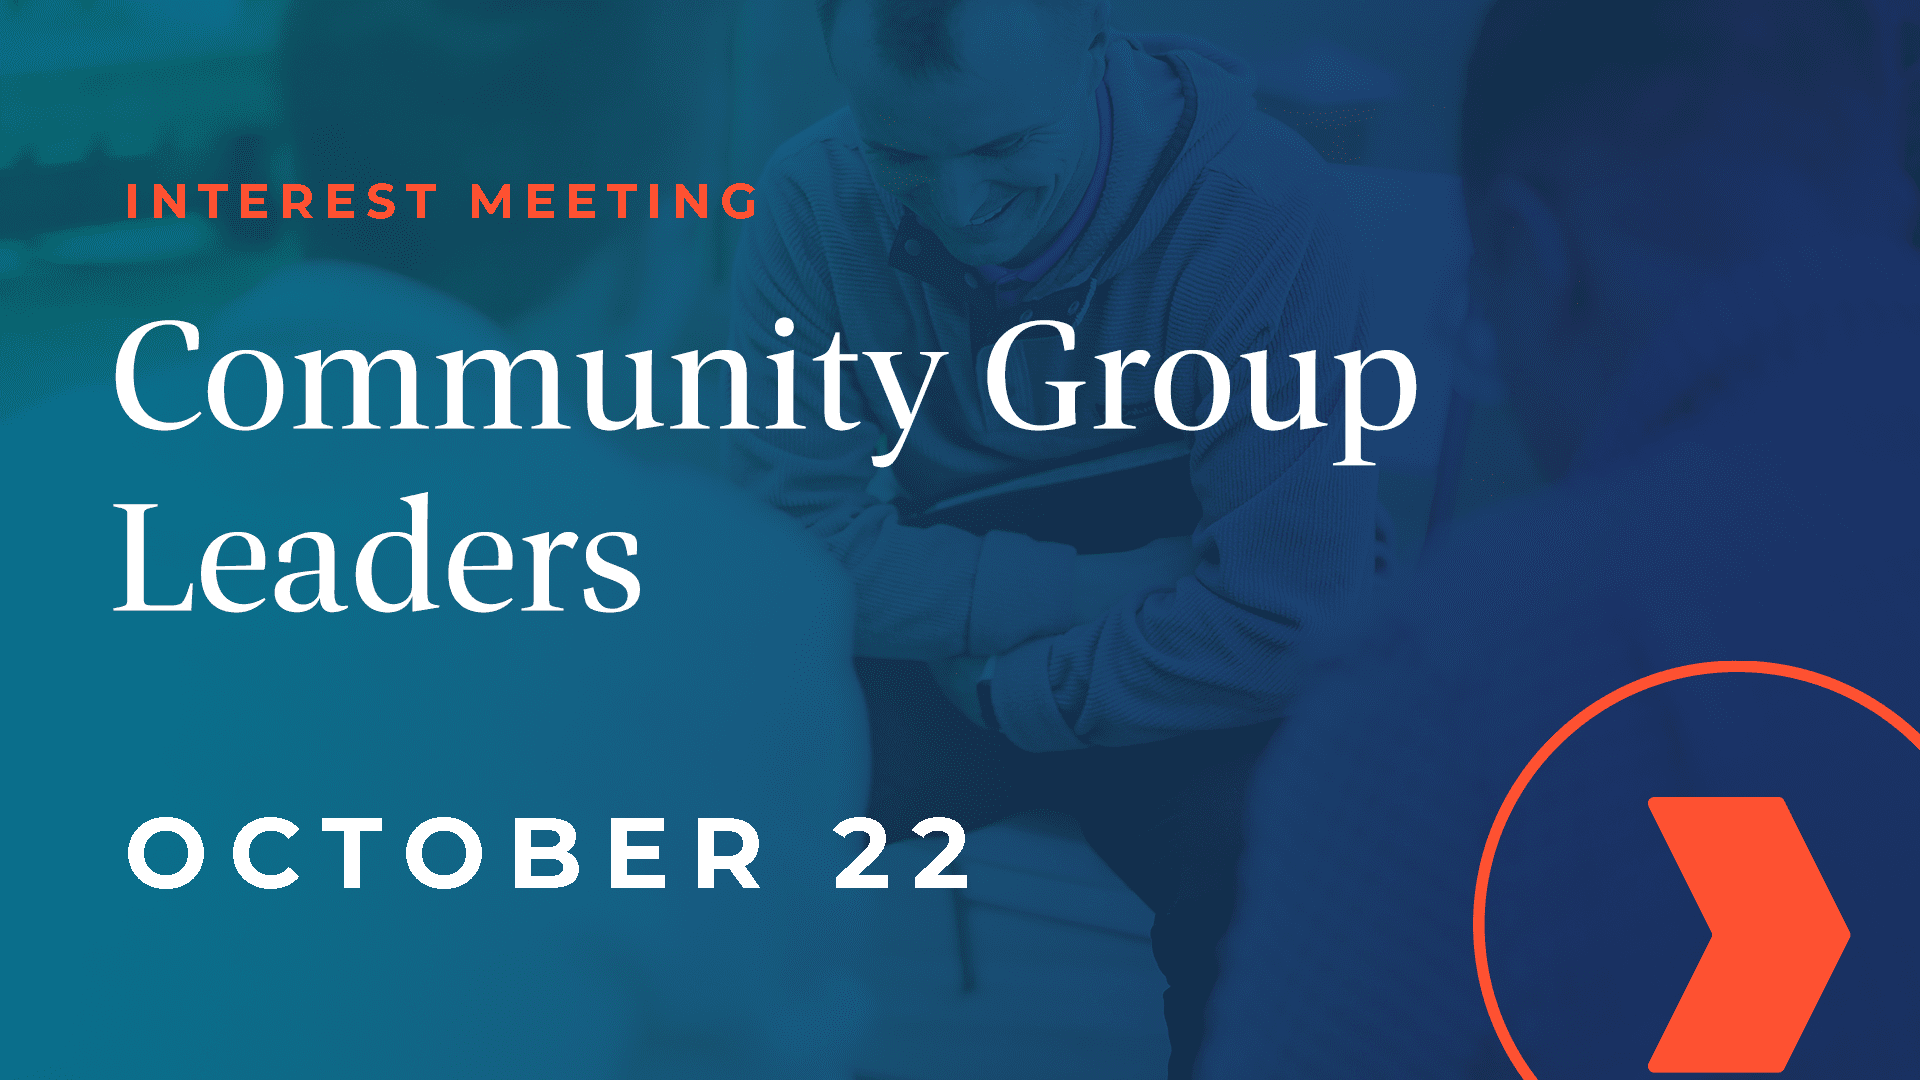 Community Group Leaders Interest Meeting